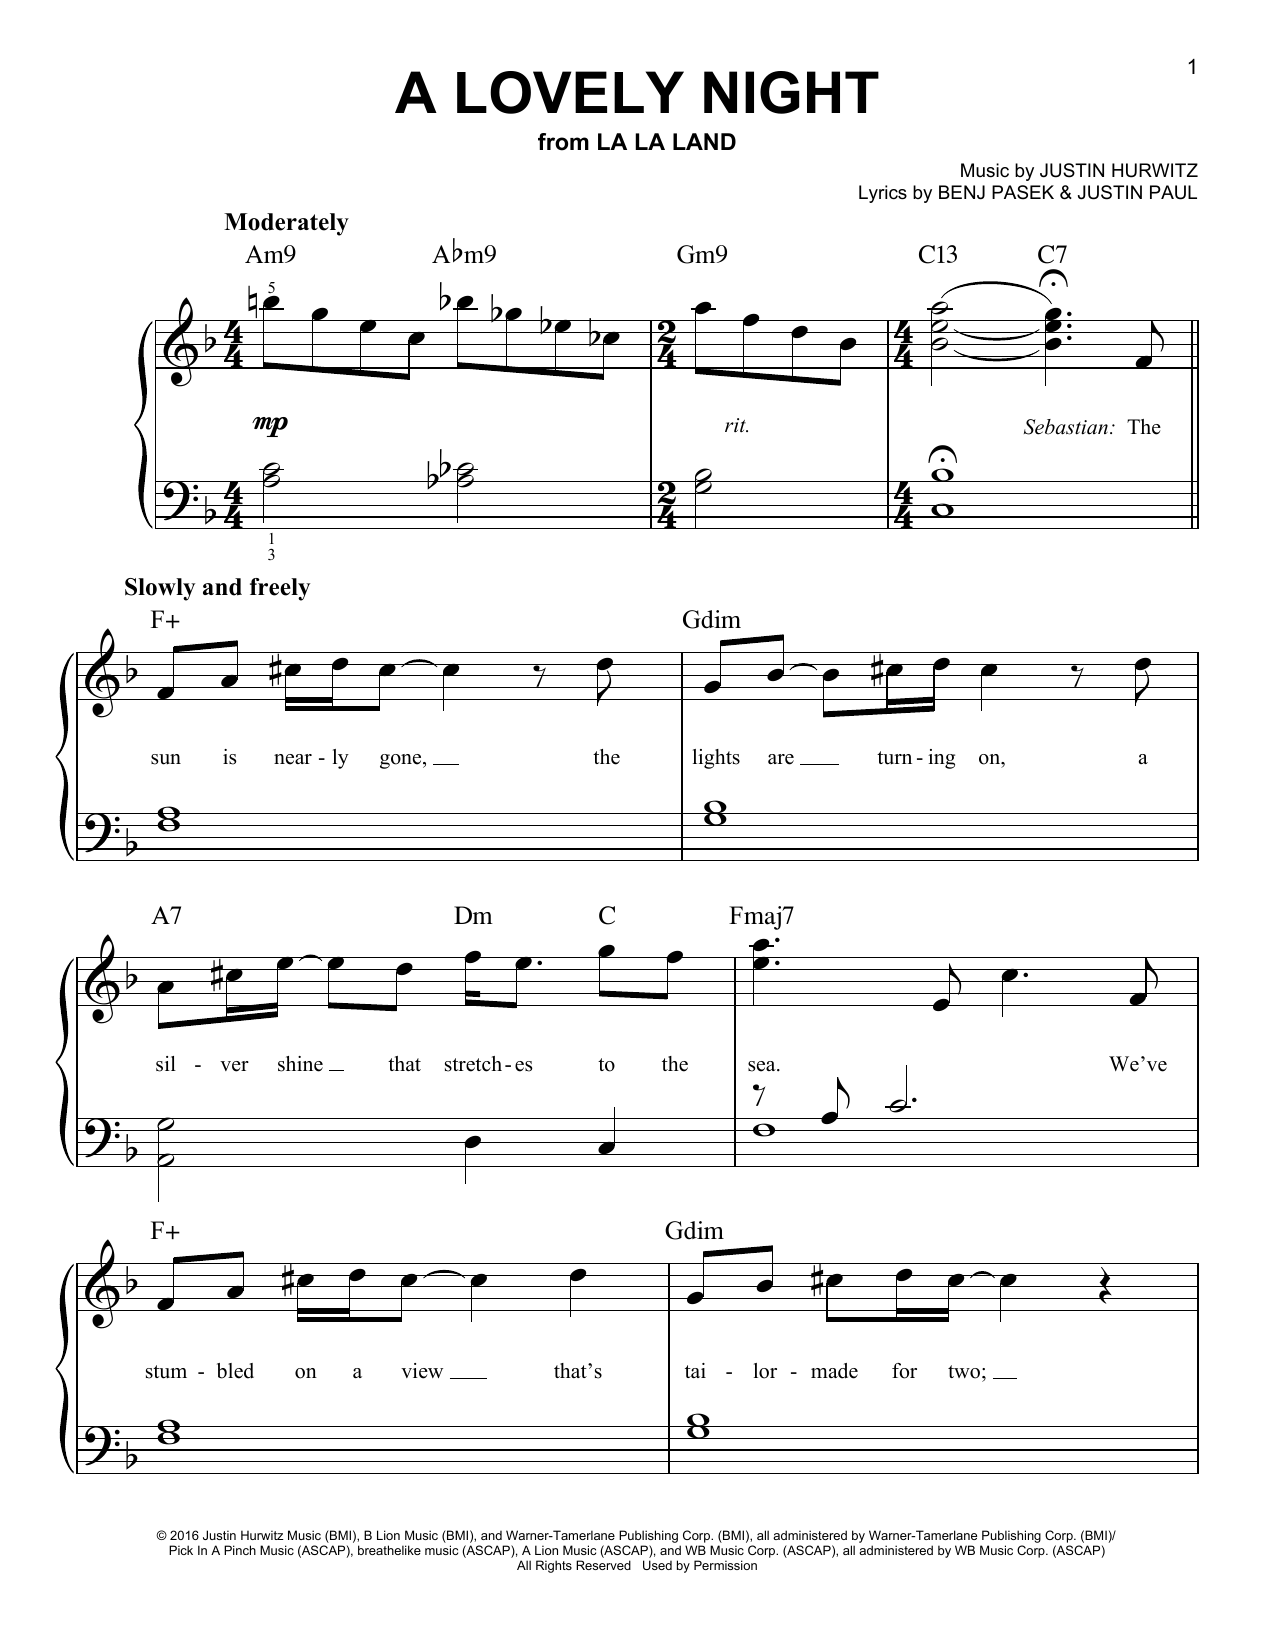 Ryan Gosling & Emma Stone A Lovely Night (from La La Land) Sheet Music Notes & Chords for Ukulele - Download or Print PDF